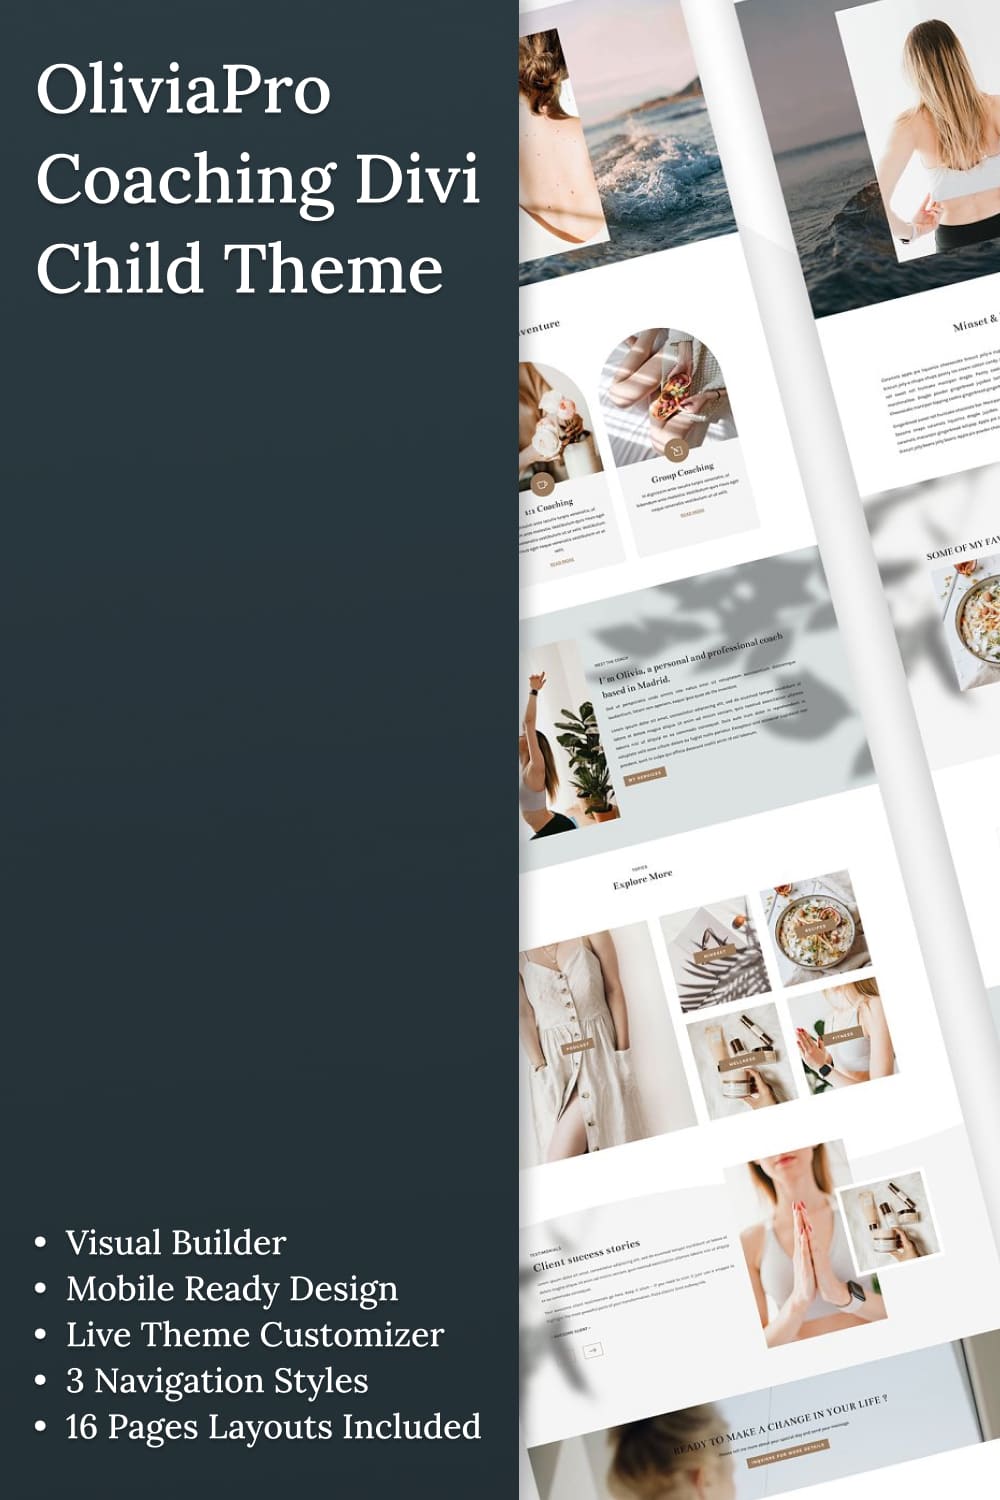 OliviaPro Coaching Divi Child Theme - Pinterest.